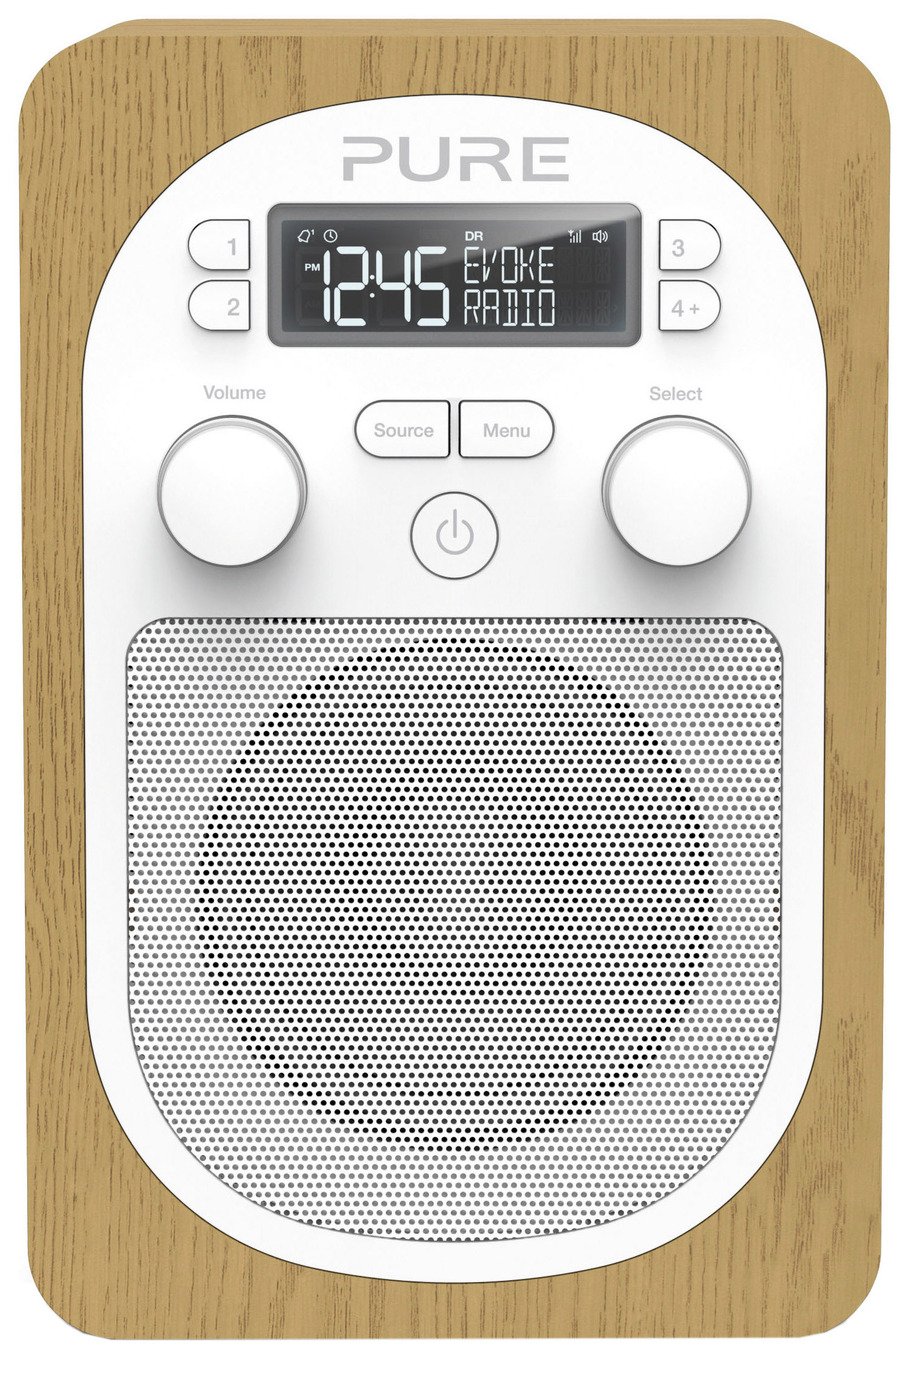 Pure Evoke H2 Portable DAB /FM Radio with Alarm - Oak